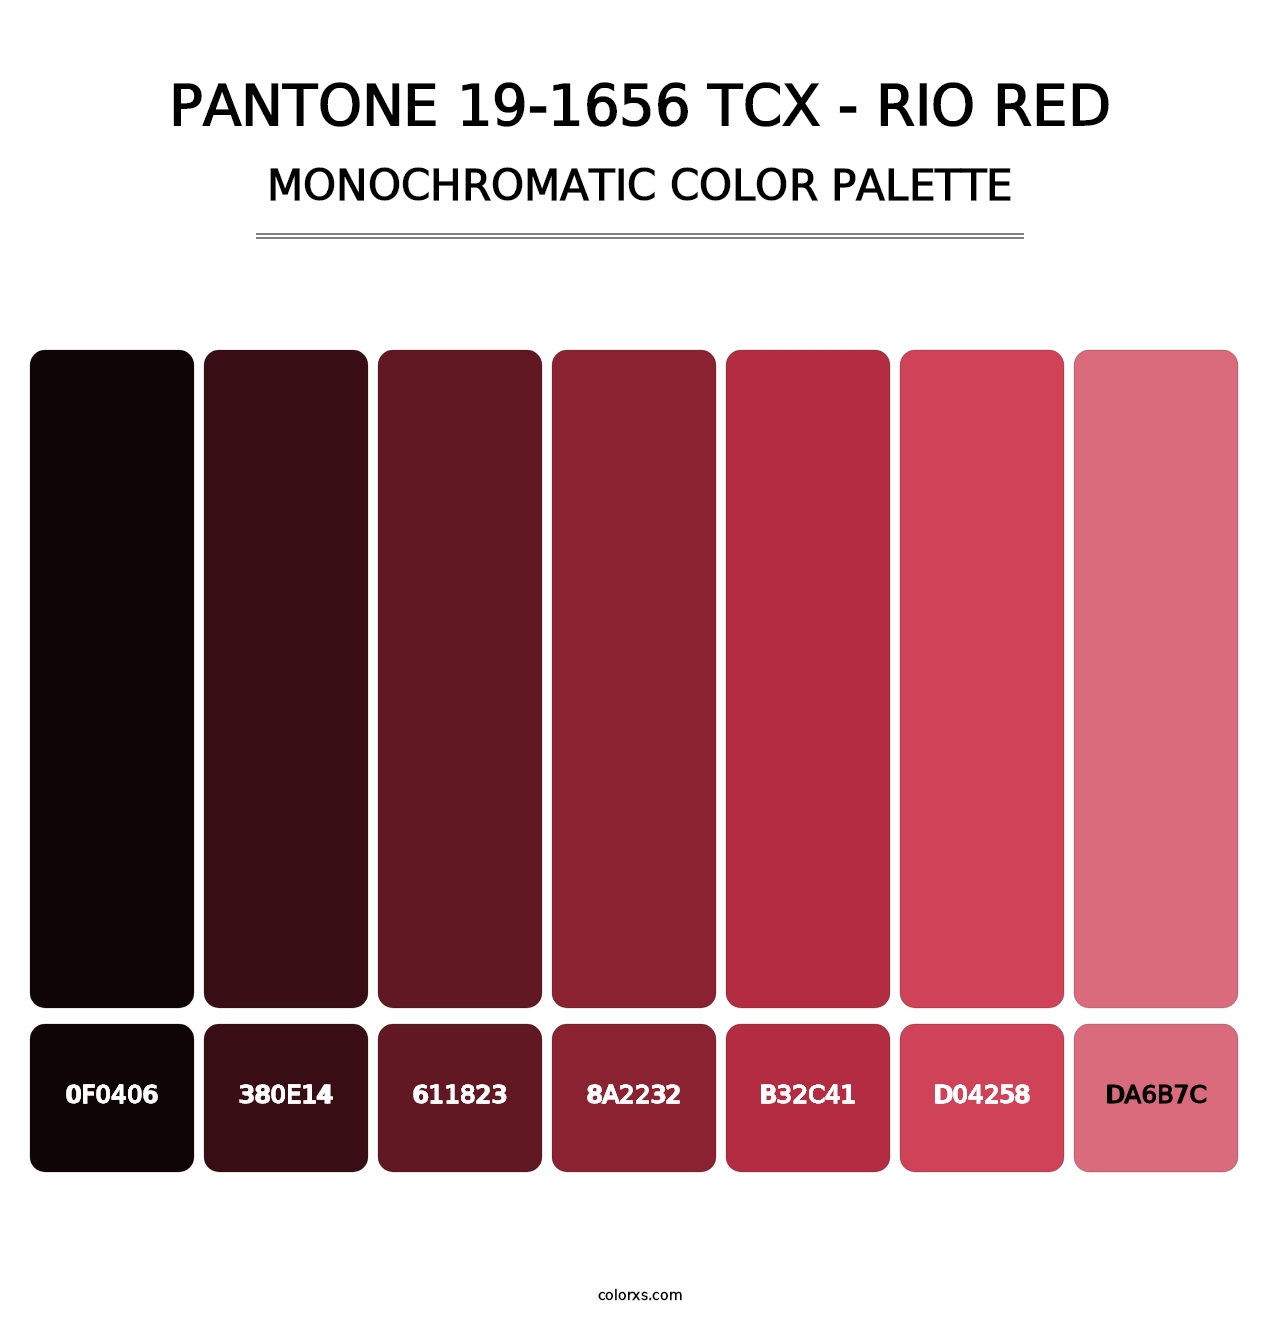 PANTONE 19-1656 TCX - Rio Red - Monochromatic Color Palette